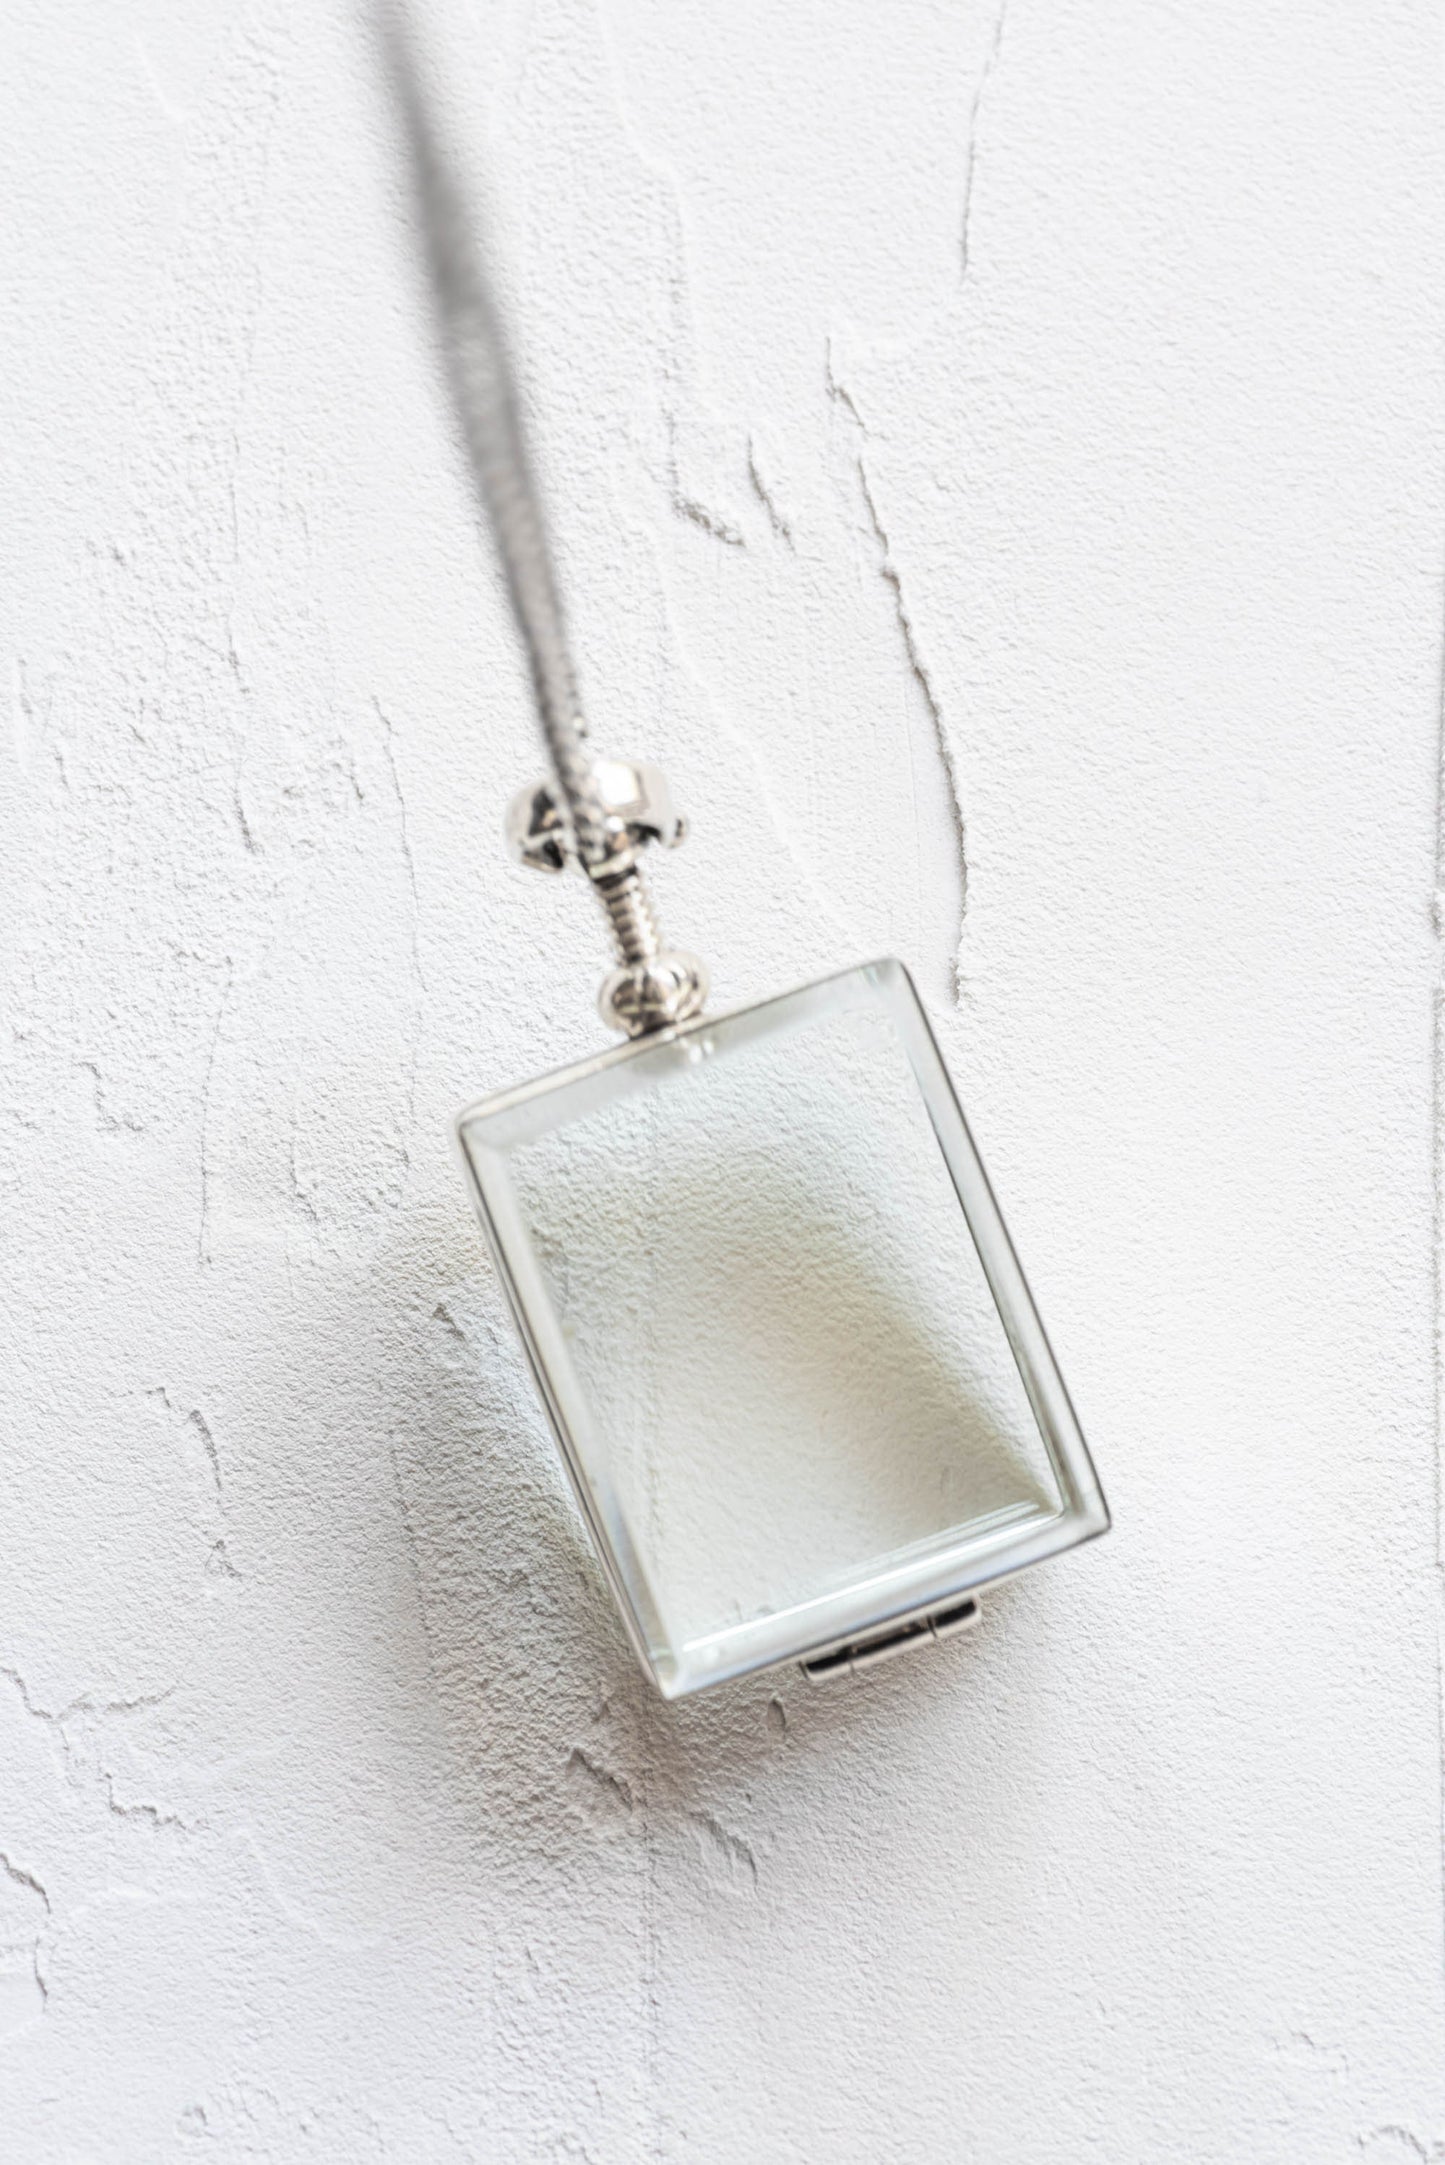 Deep Personalised Rectangle Glass Locket Pendant for Cherished Memories, Memento Locket for Stones-Keepsake-Small Medium Large Photo Locket